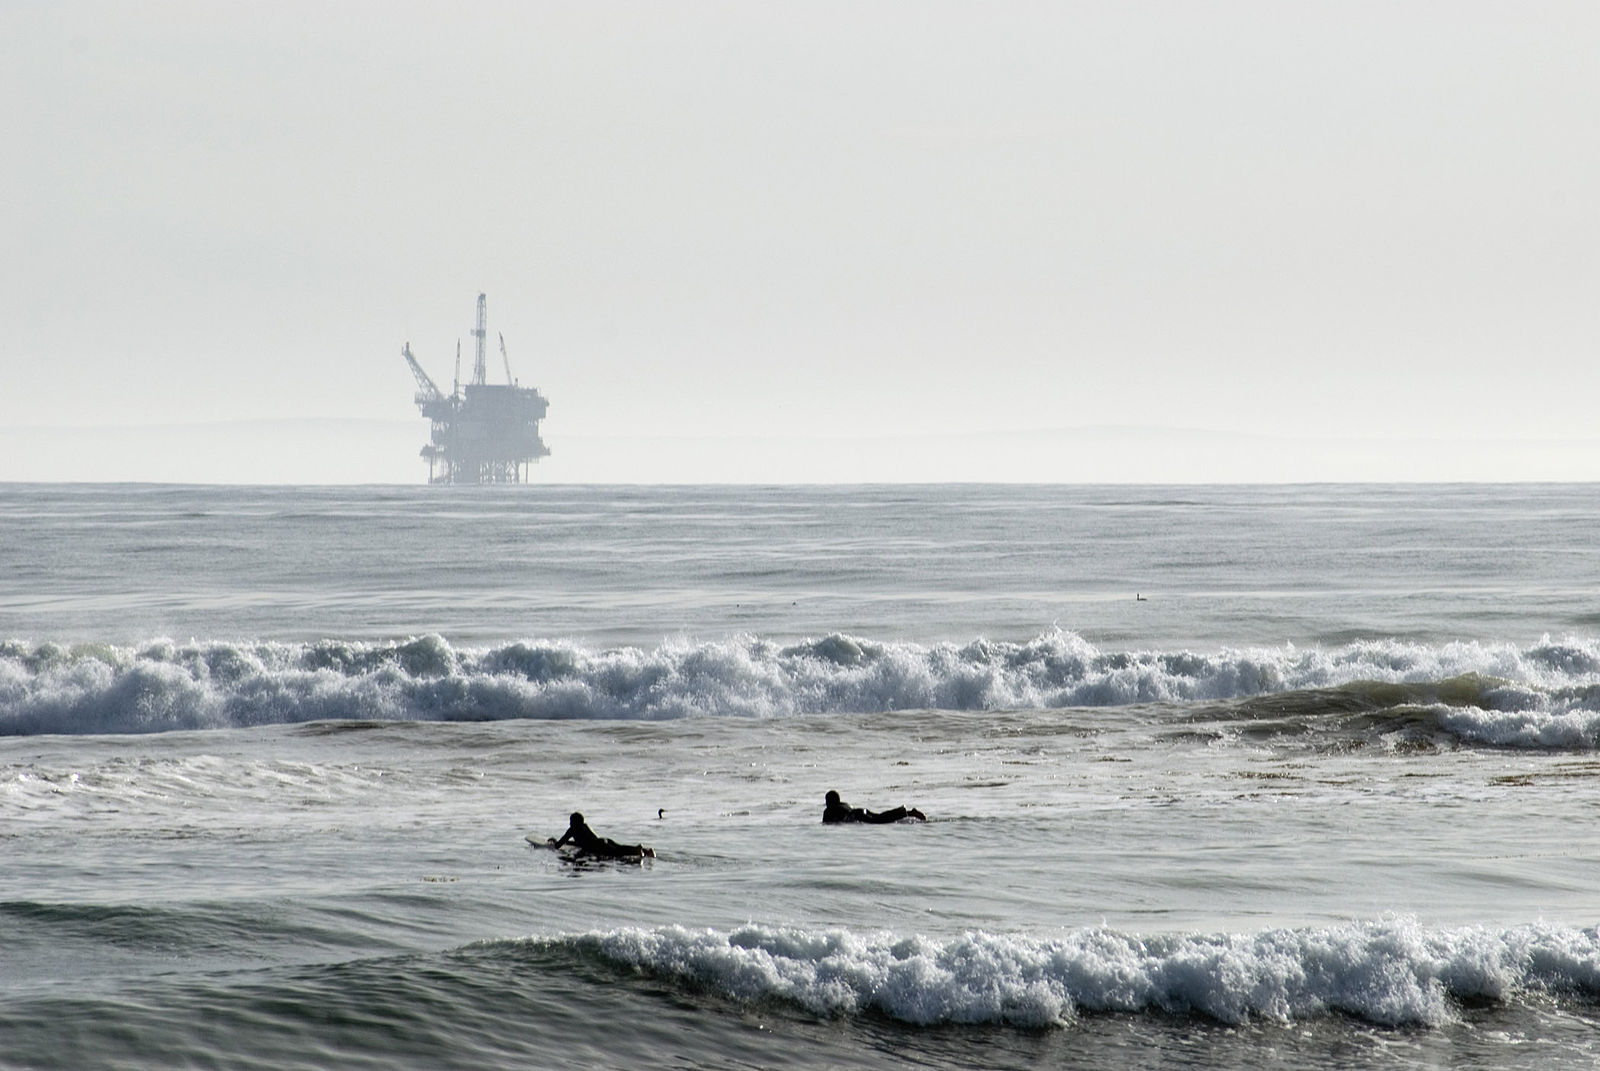 Oil rig off the coast of California